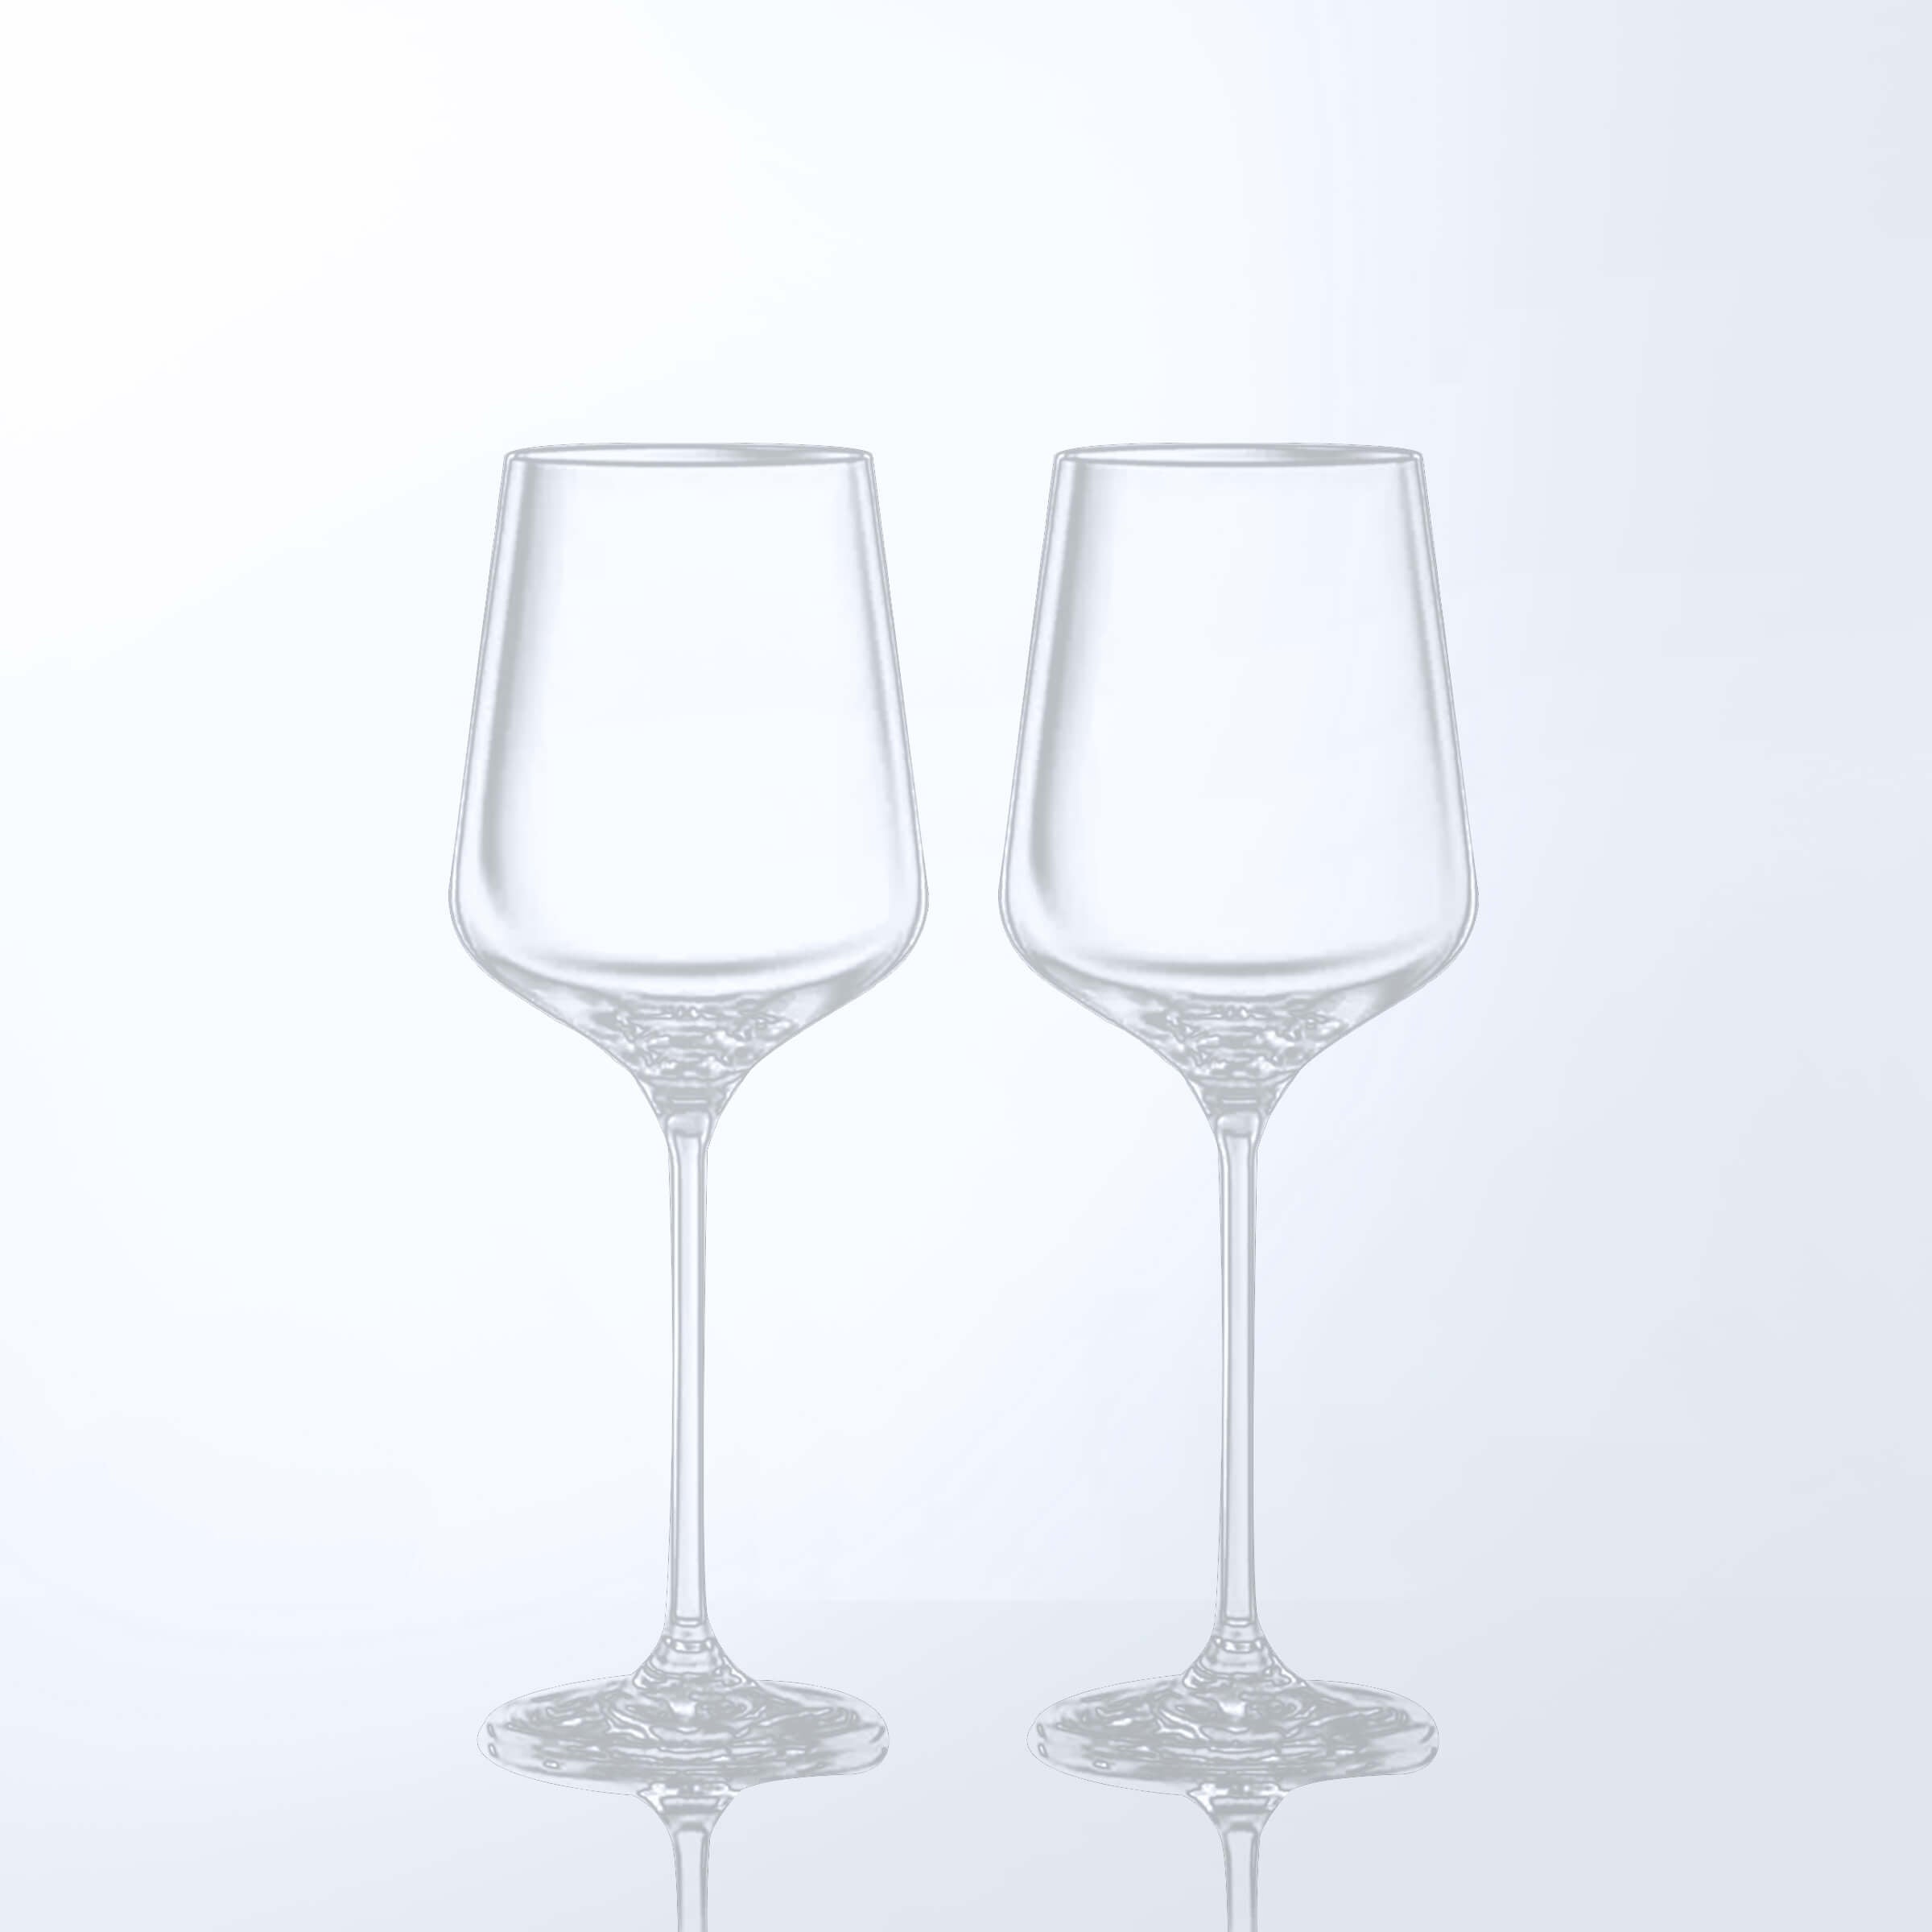 Martell Noblige & Bottega Crystal Glasses Gift Set with Engraving |馬爹利名仕 &Bottega水晶洋酒杯套裝(含文字雕刻） - Design Your Own Wine